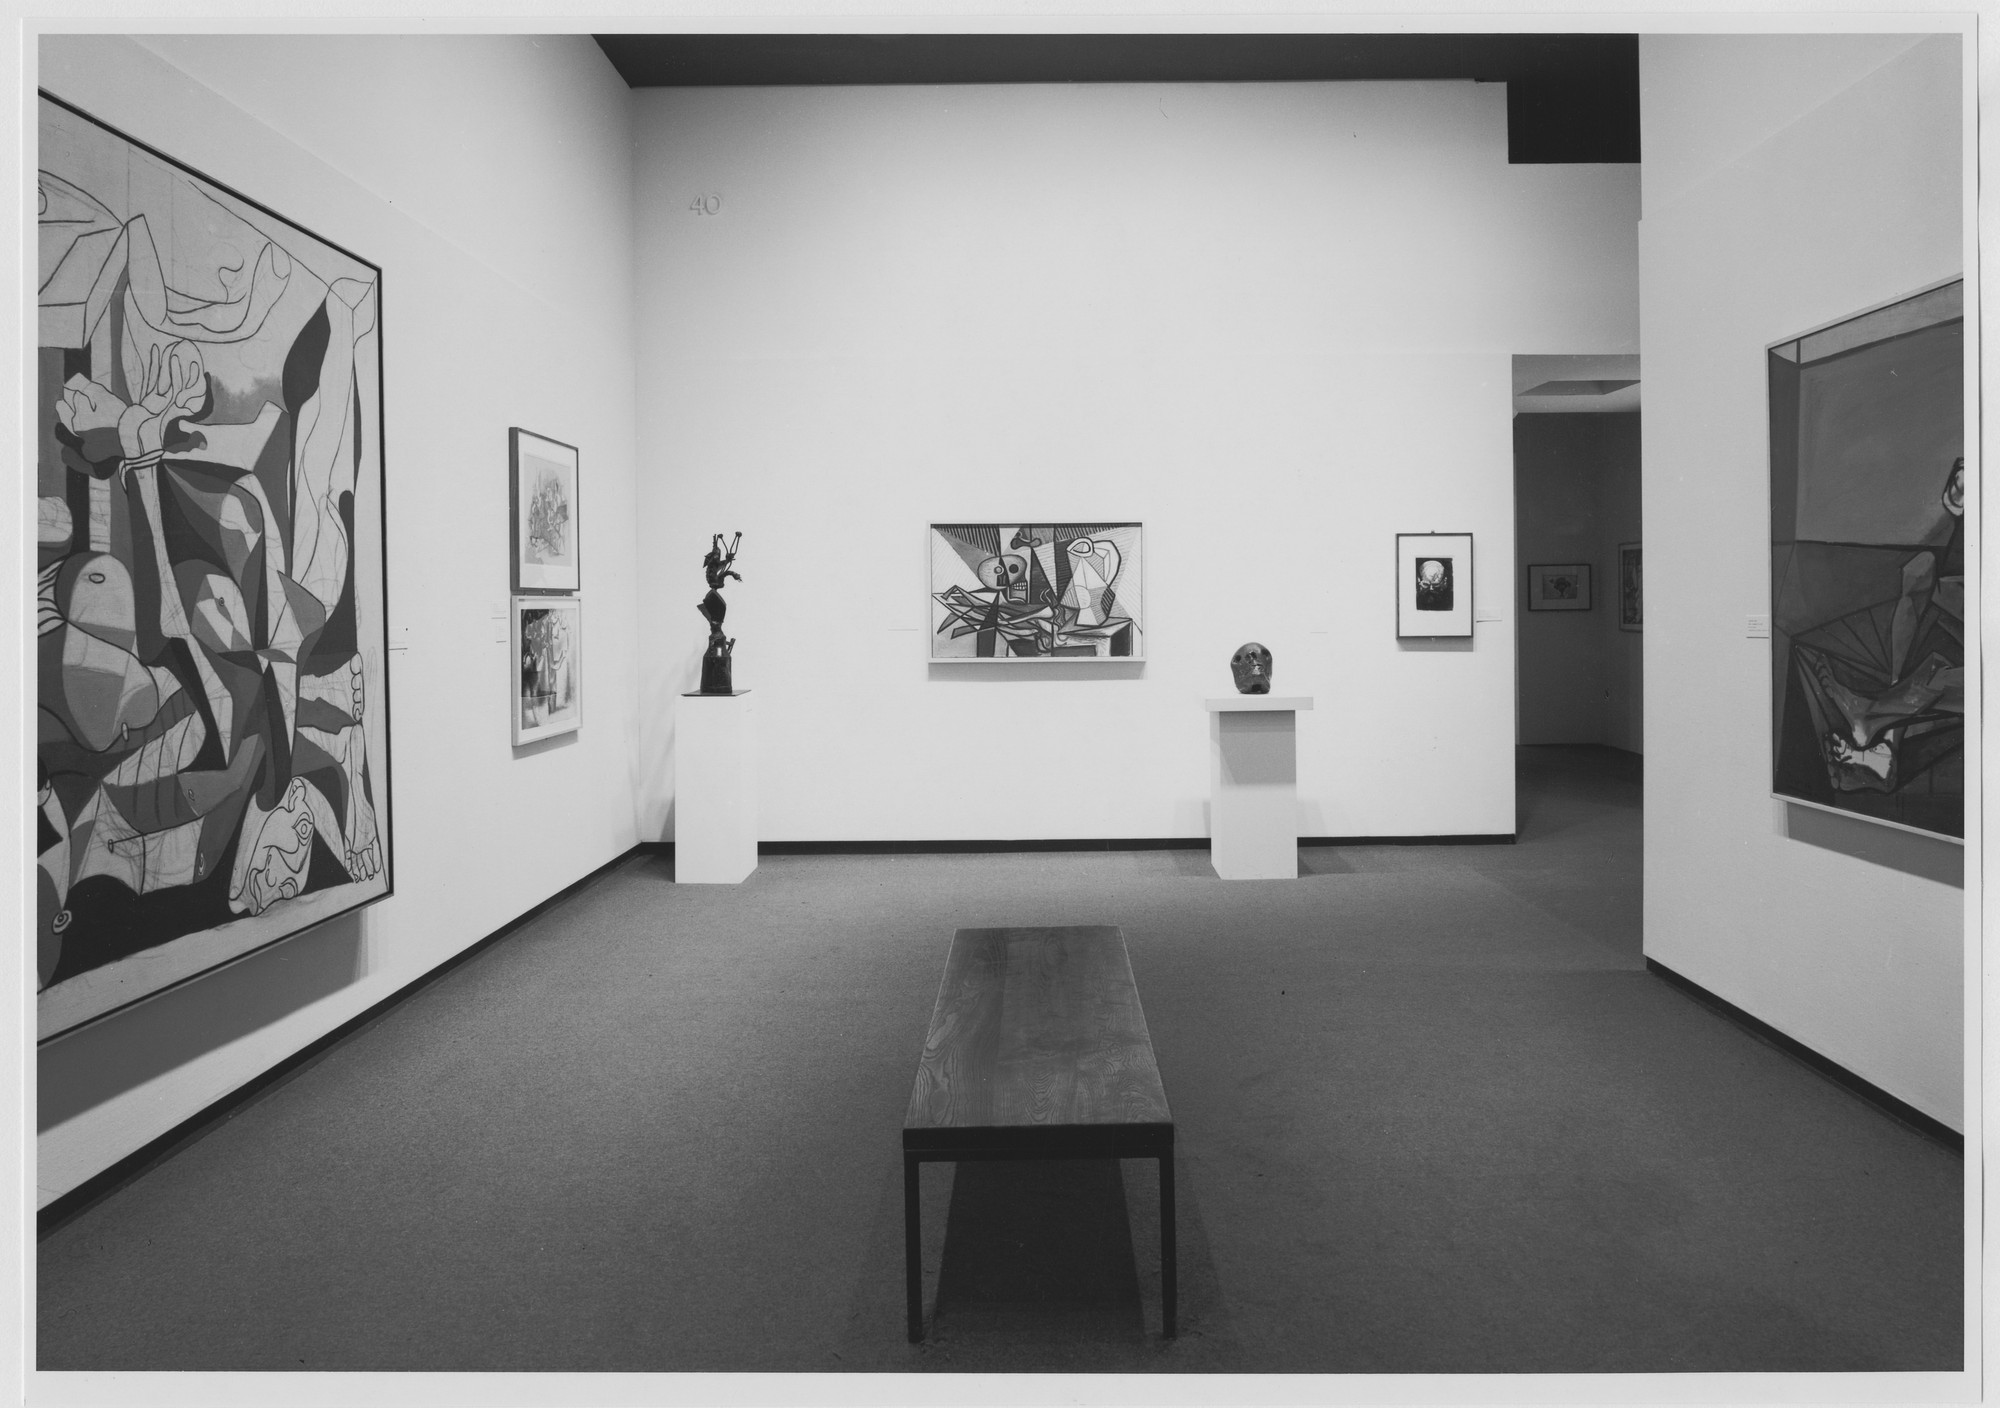 Installation view of the exhibition "Pablo Picasso A Retrospective" MoMA